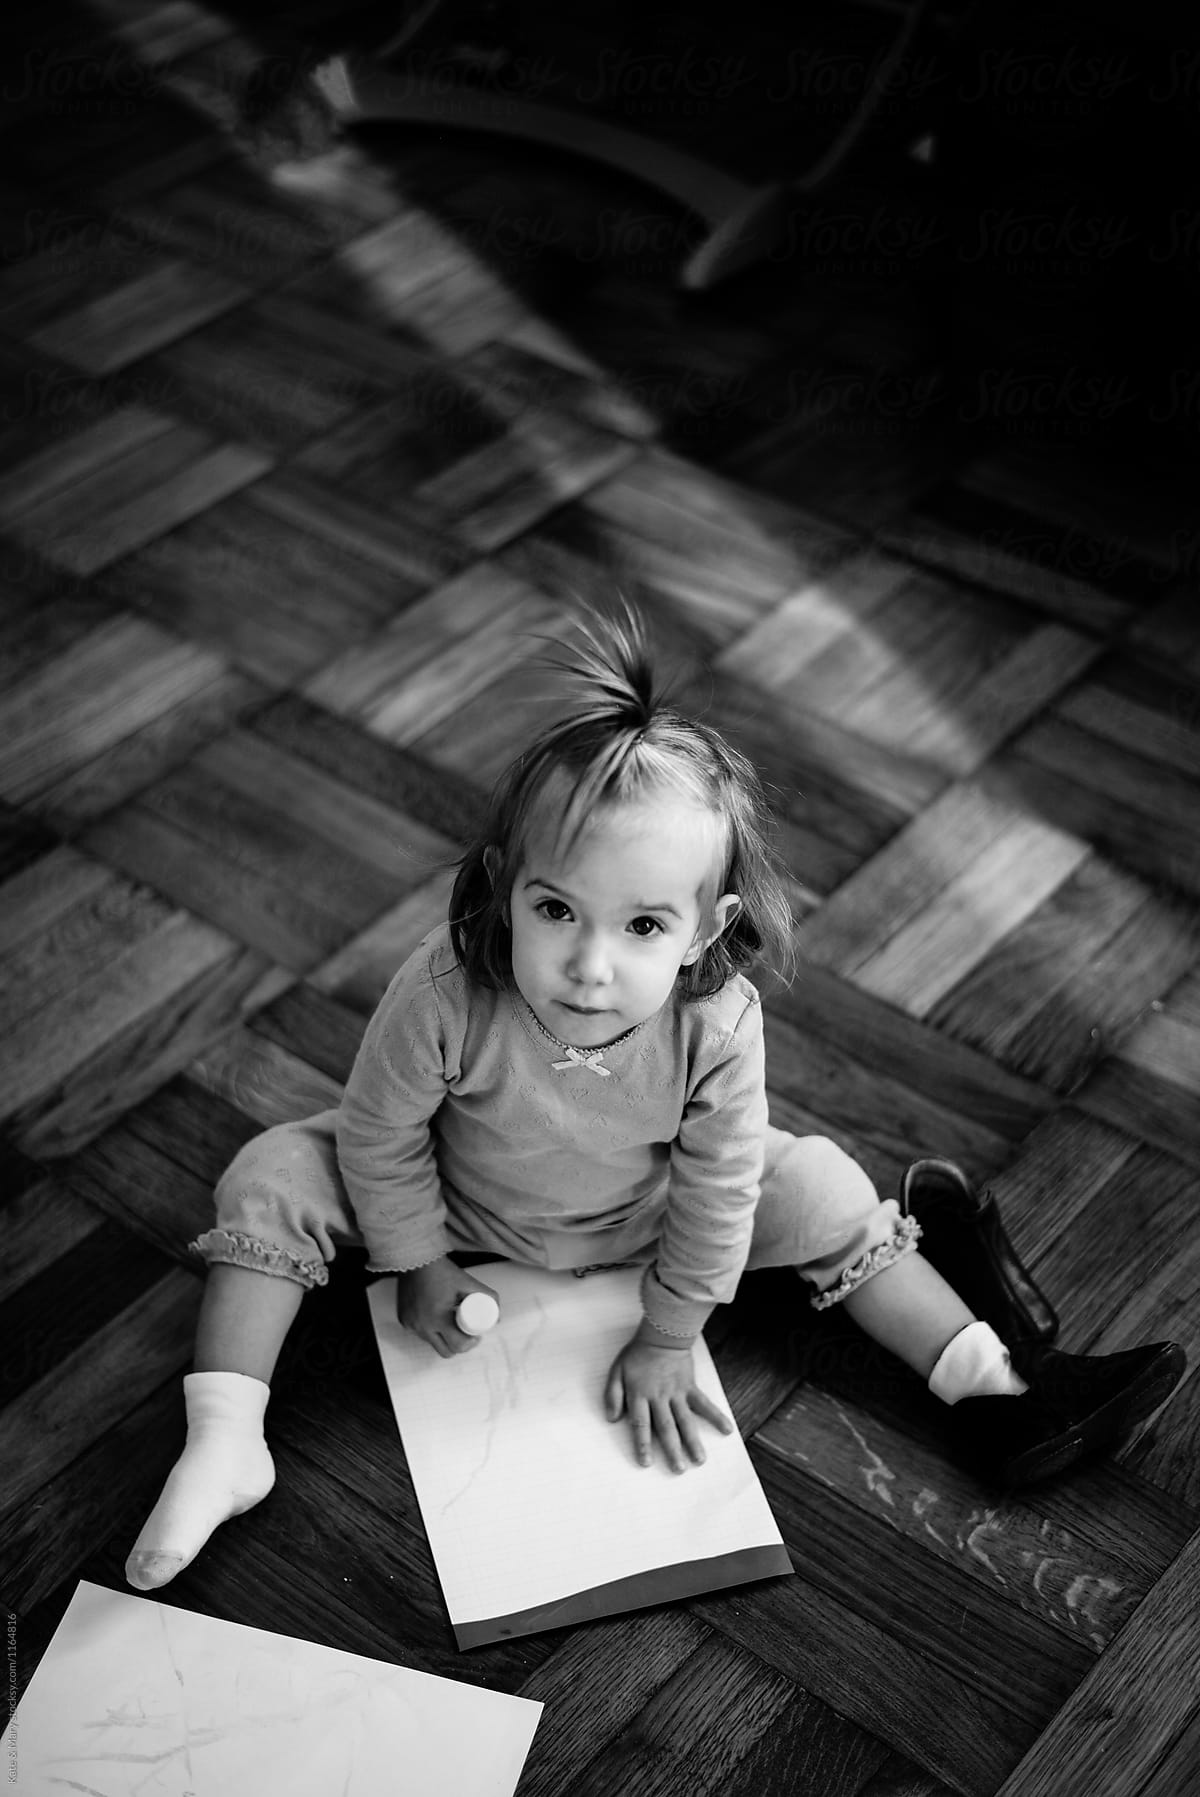 Portrait of beautiful baby drawing on floor